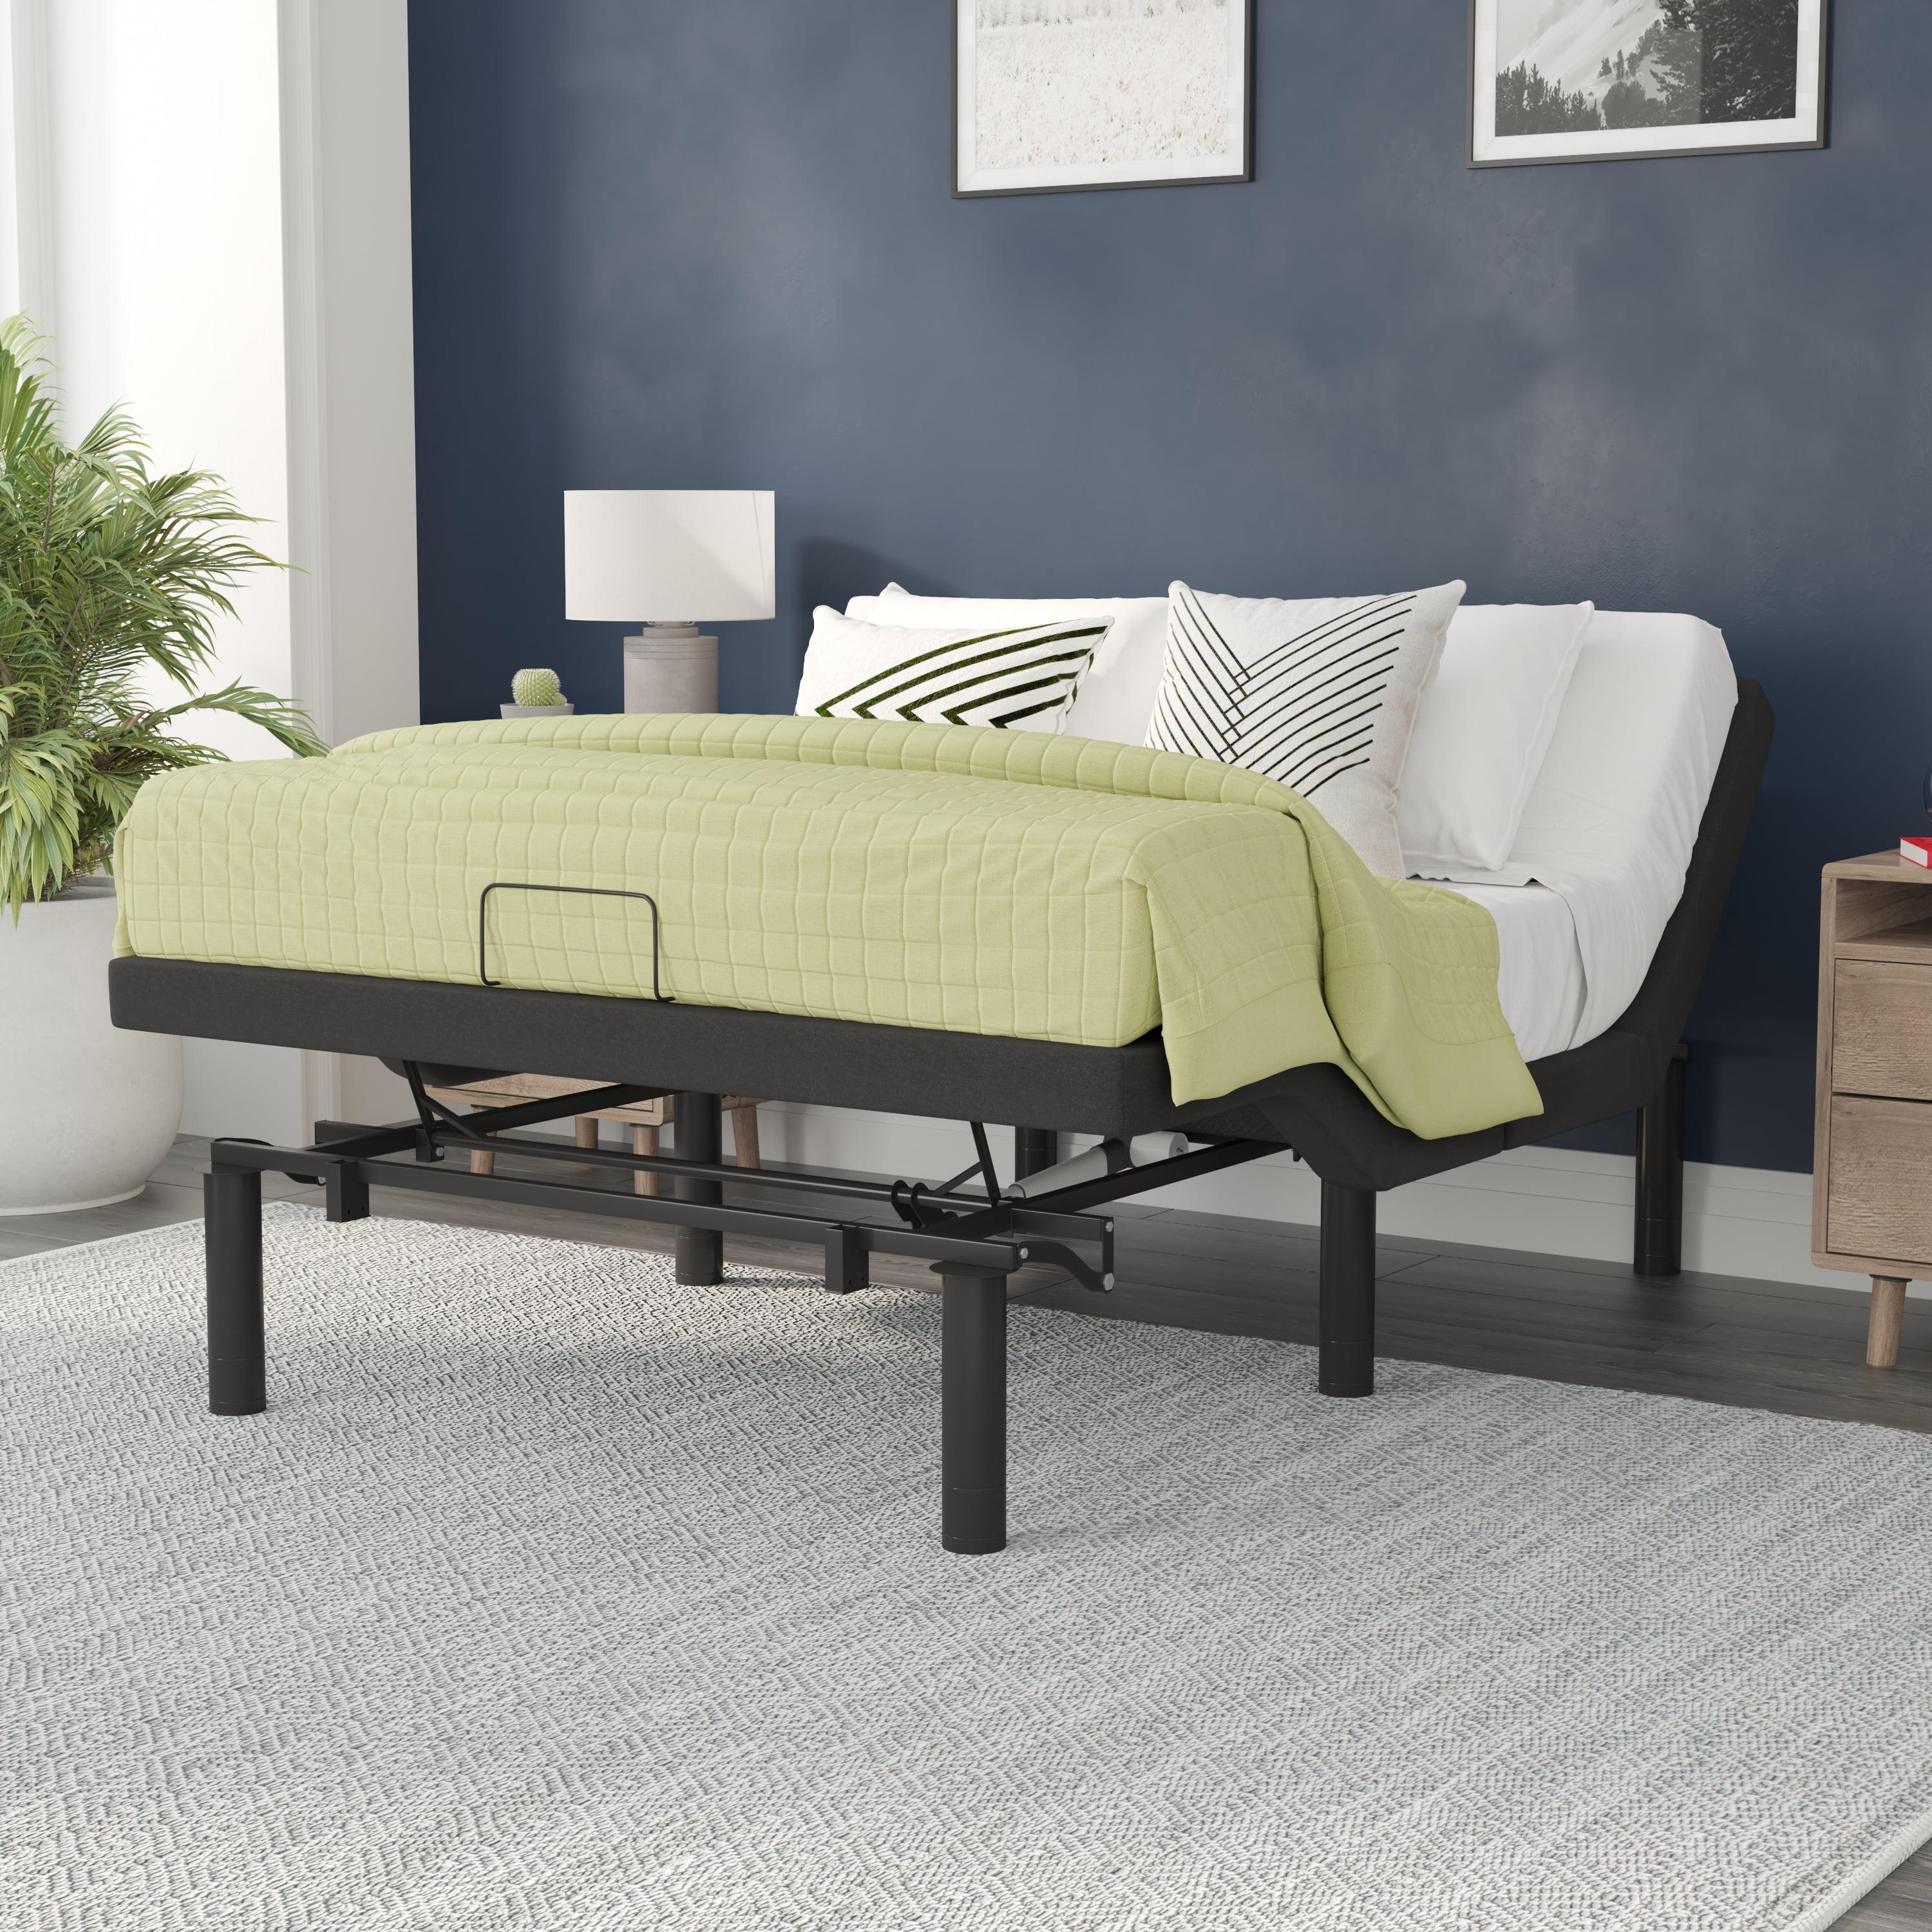 Selene Full-Size Adjustable Platform Bed with Wireless Remote, Black